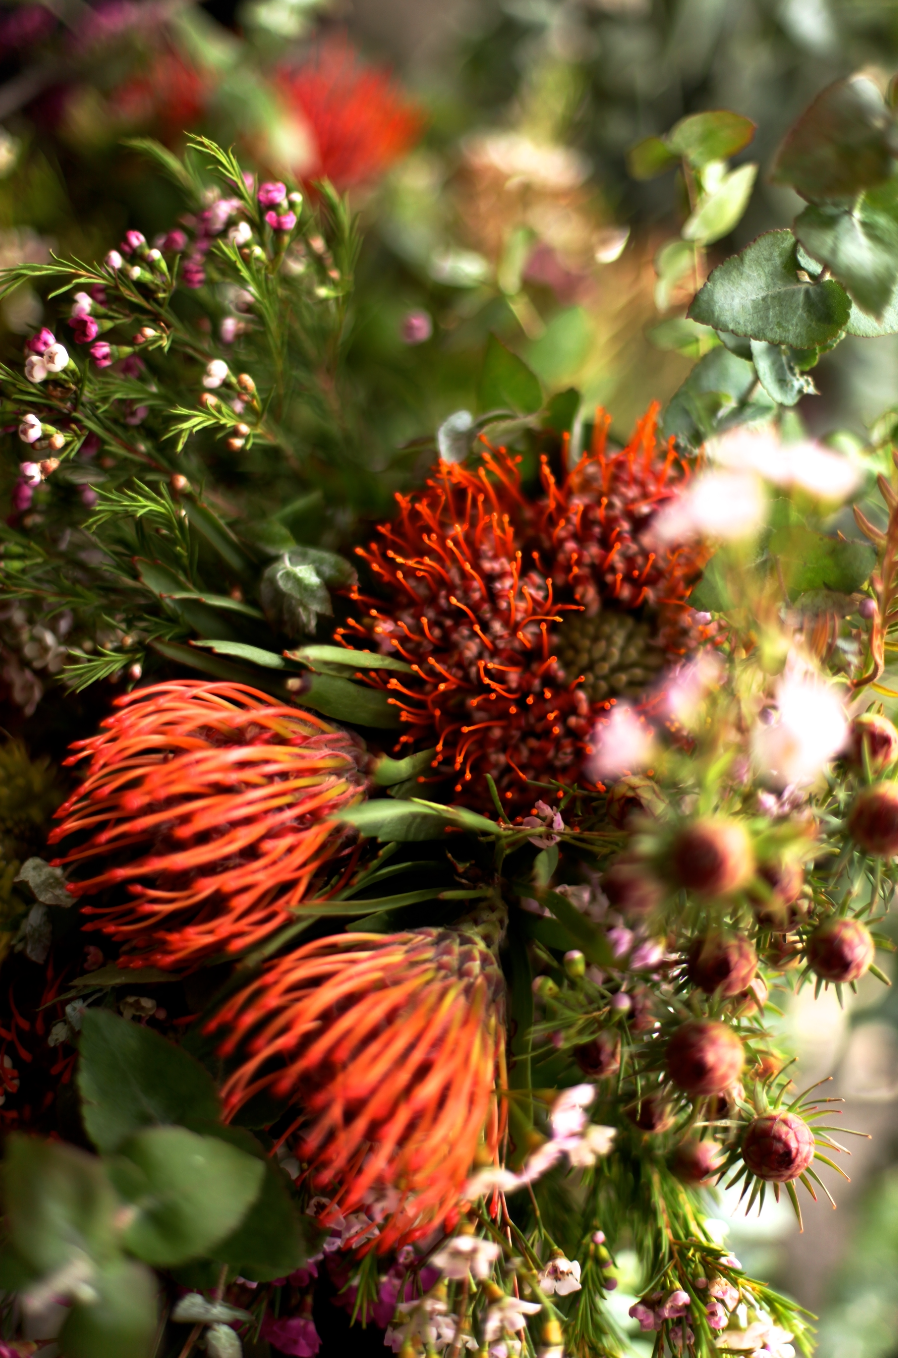 Australian Native Wildflowers II - Geraldton Wax Flower Orange Pincushion Botanical Fine Photography Print